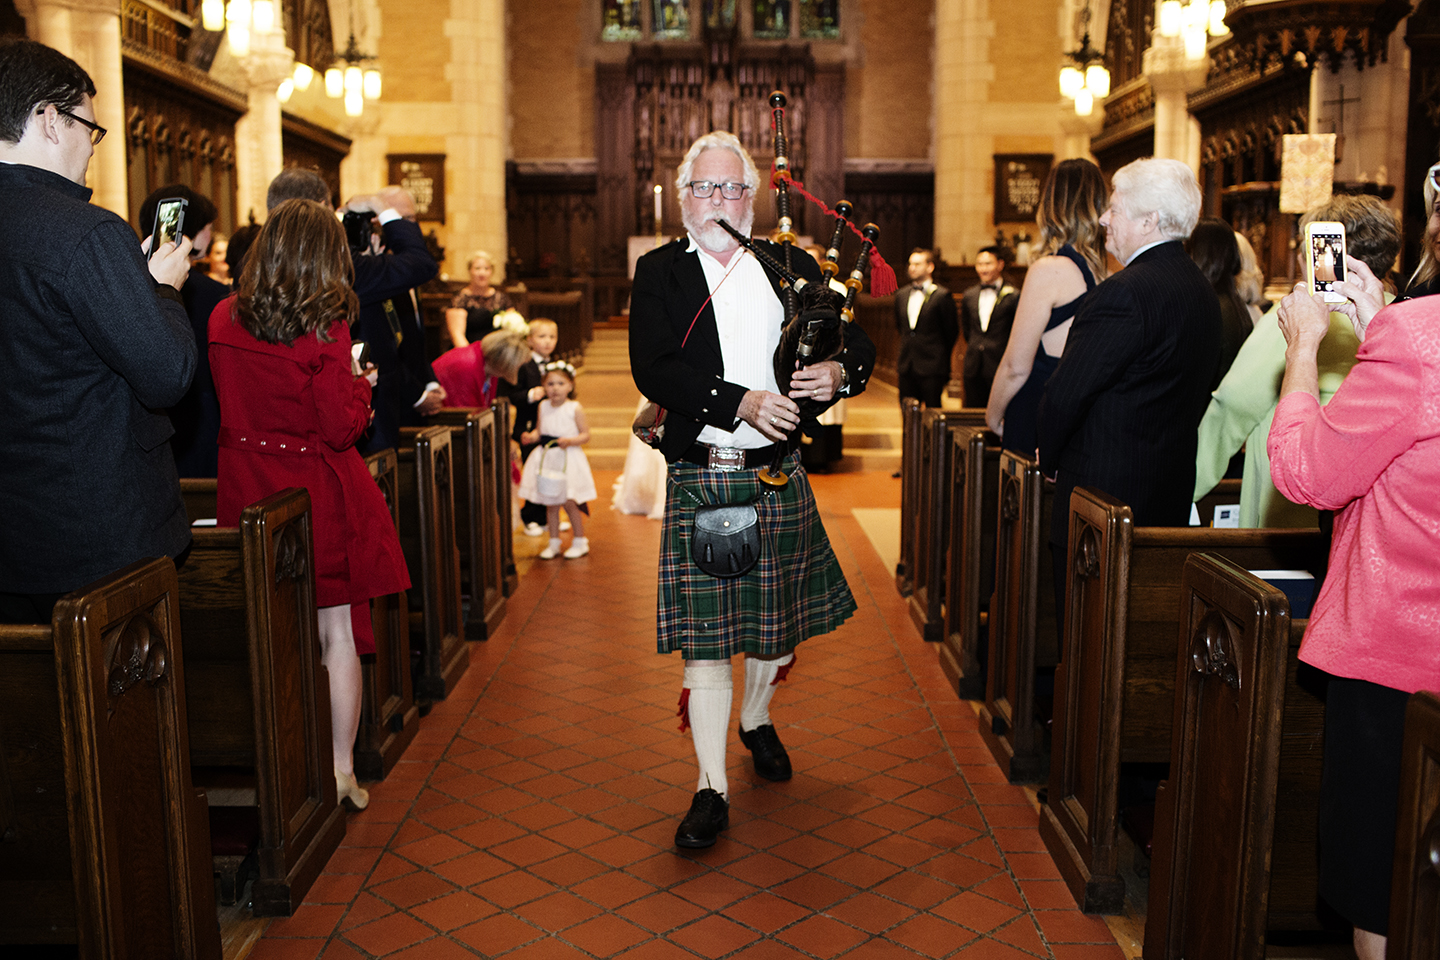 St. Mark's Episcopal Cathedral Wedding Photos | Photography by Photogen Inc. | Eliesa Johnson | Based in Minneapolis, Minnesota